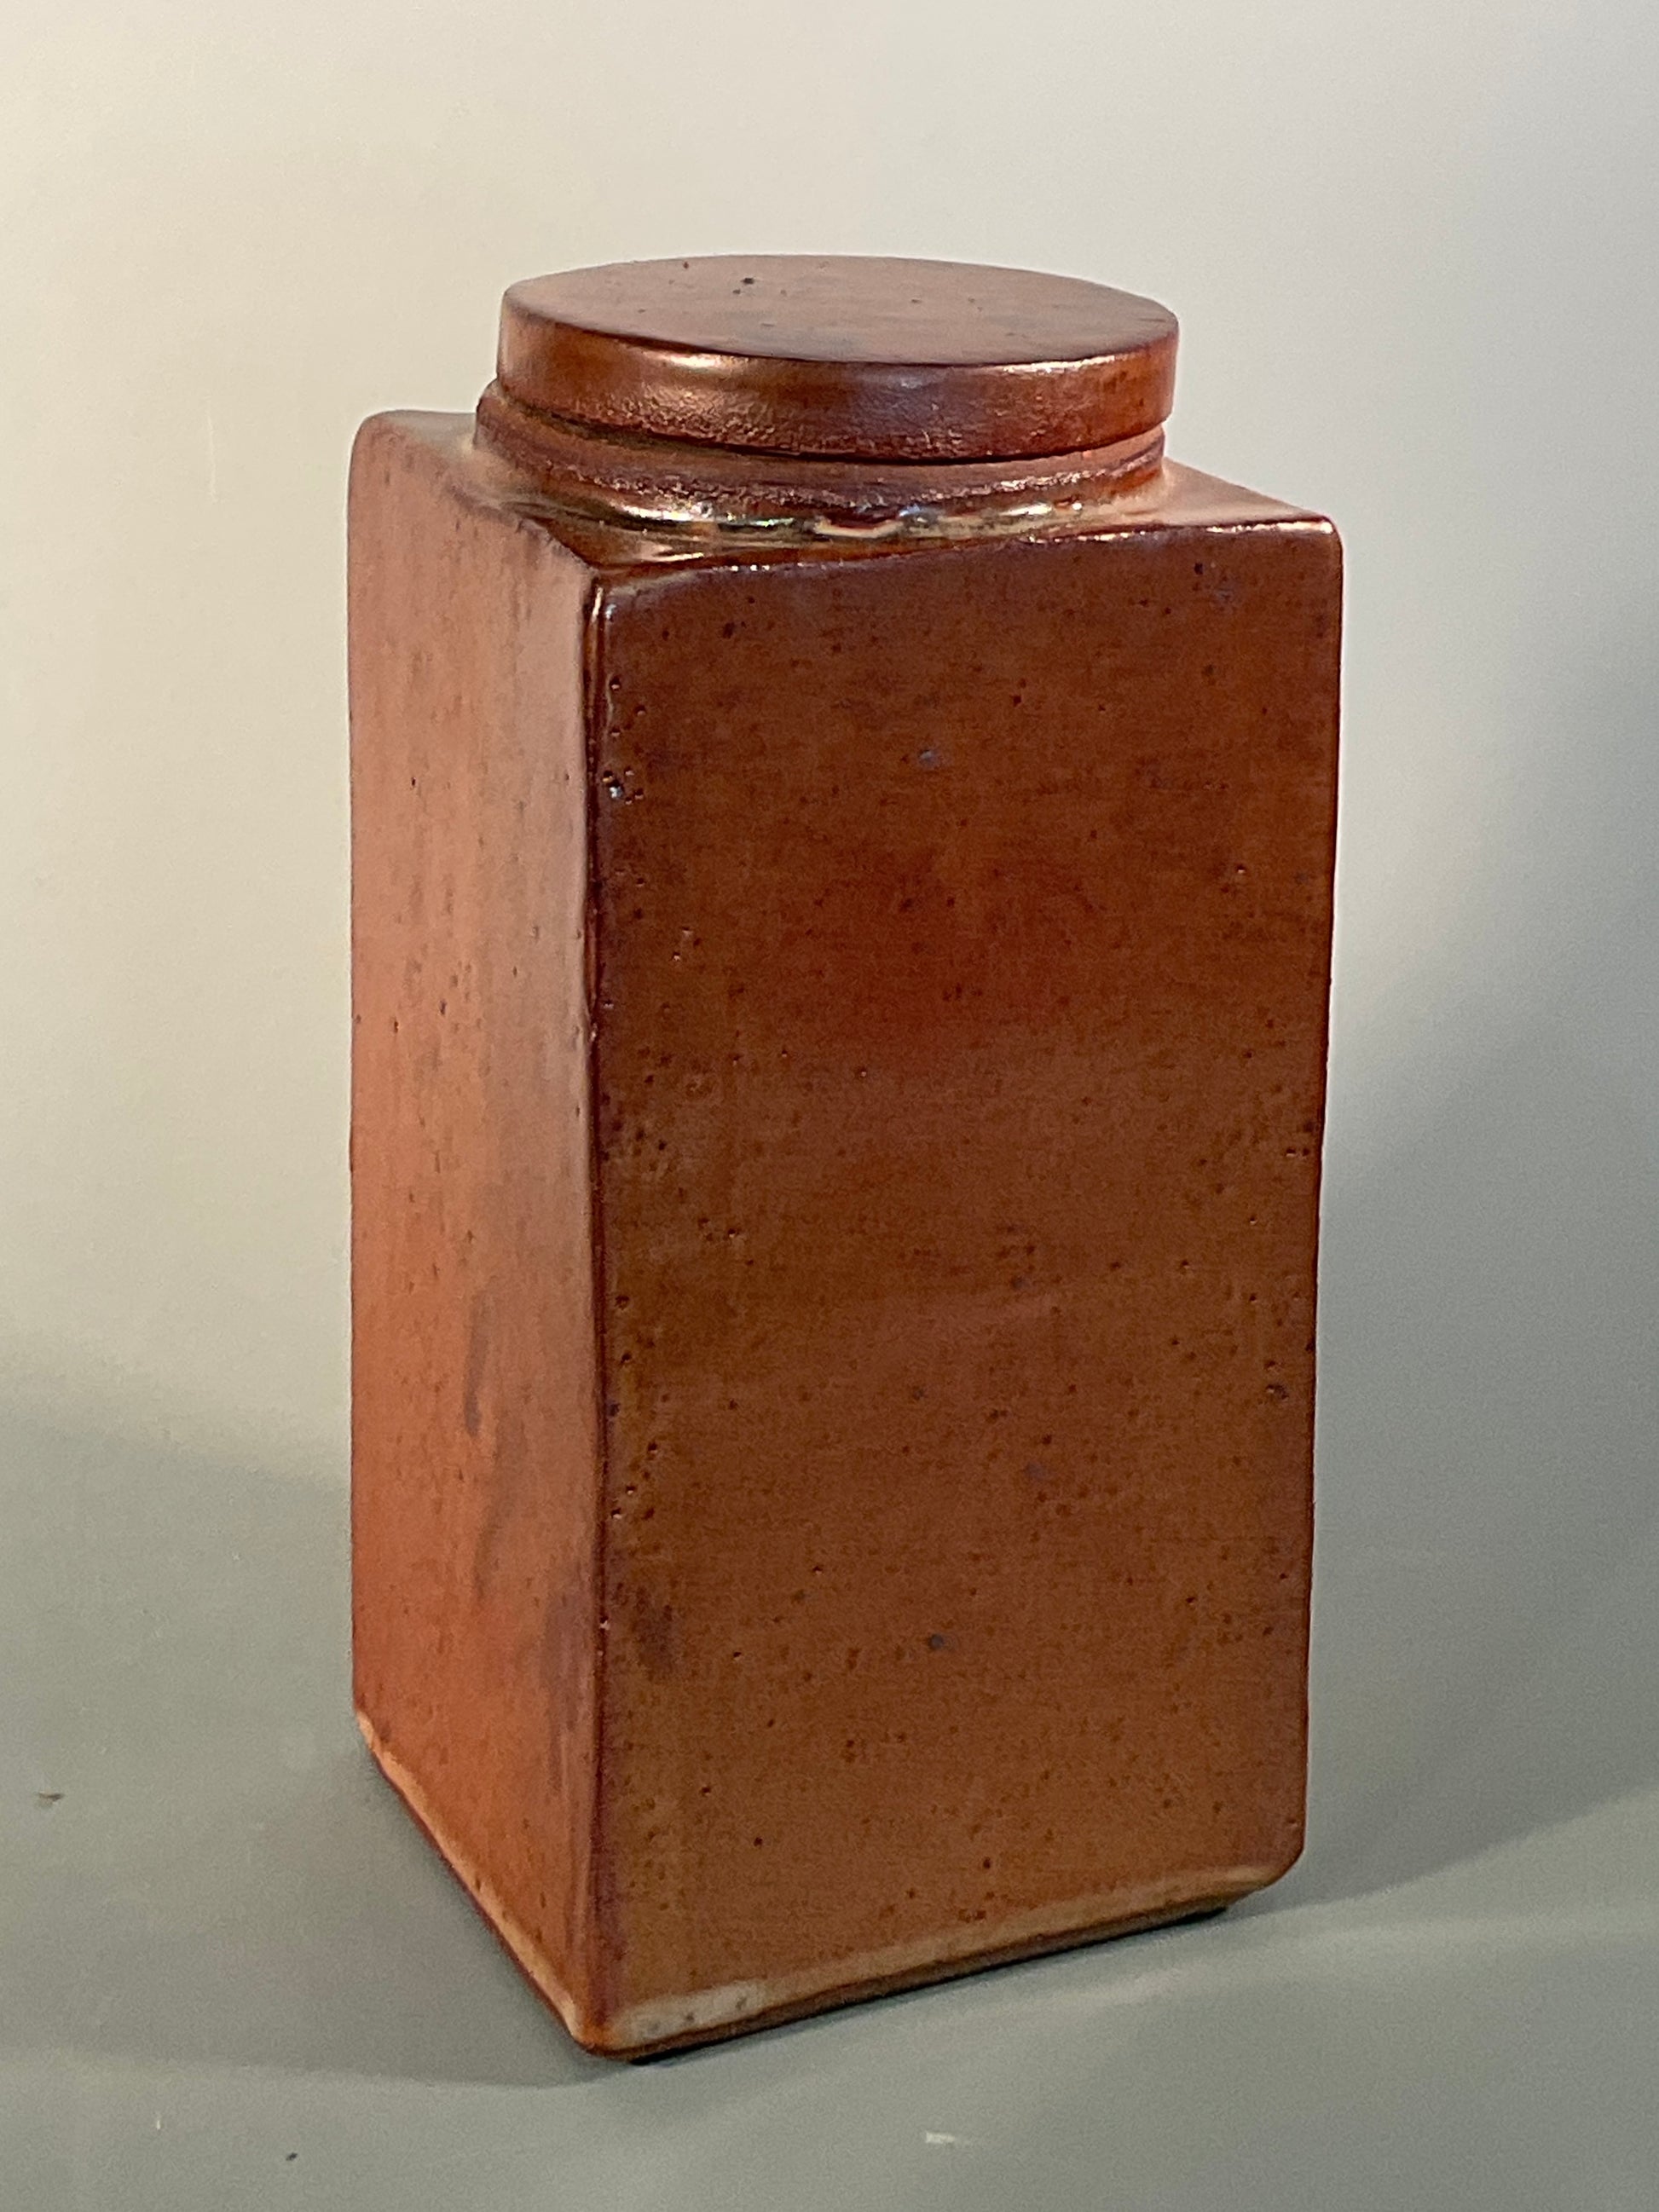 Hand thrown stoneware  Square shape with rectangle lidded slab jar  Shino glaze